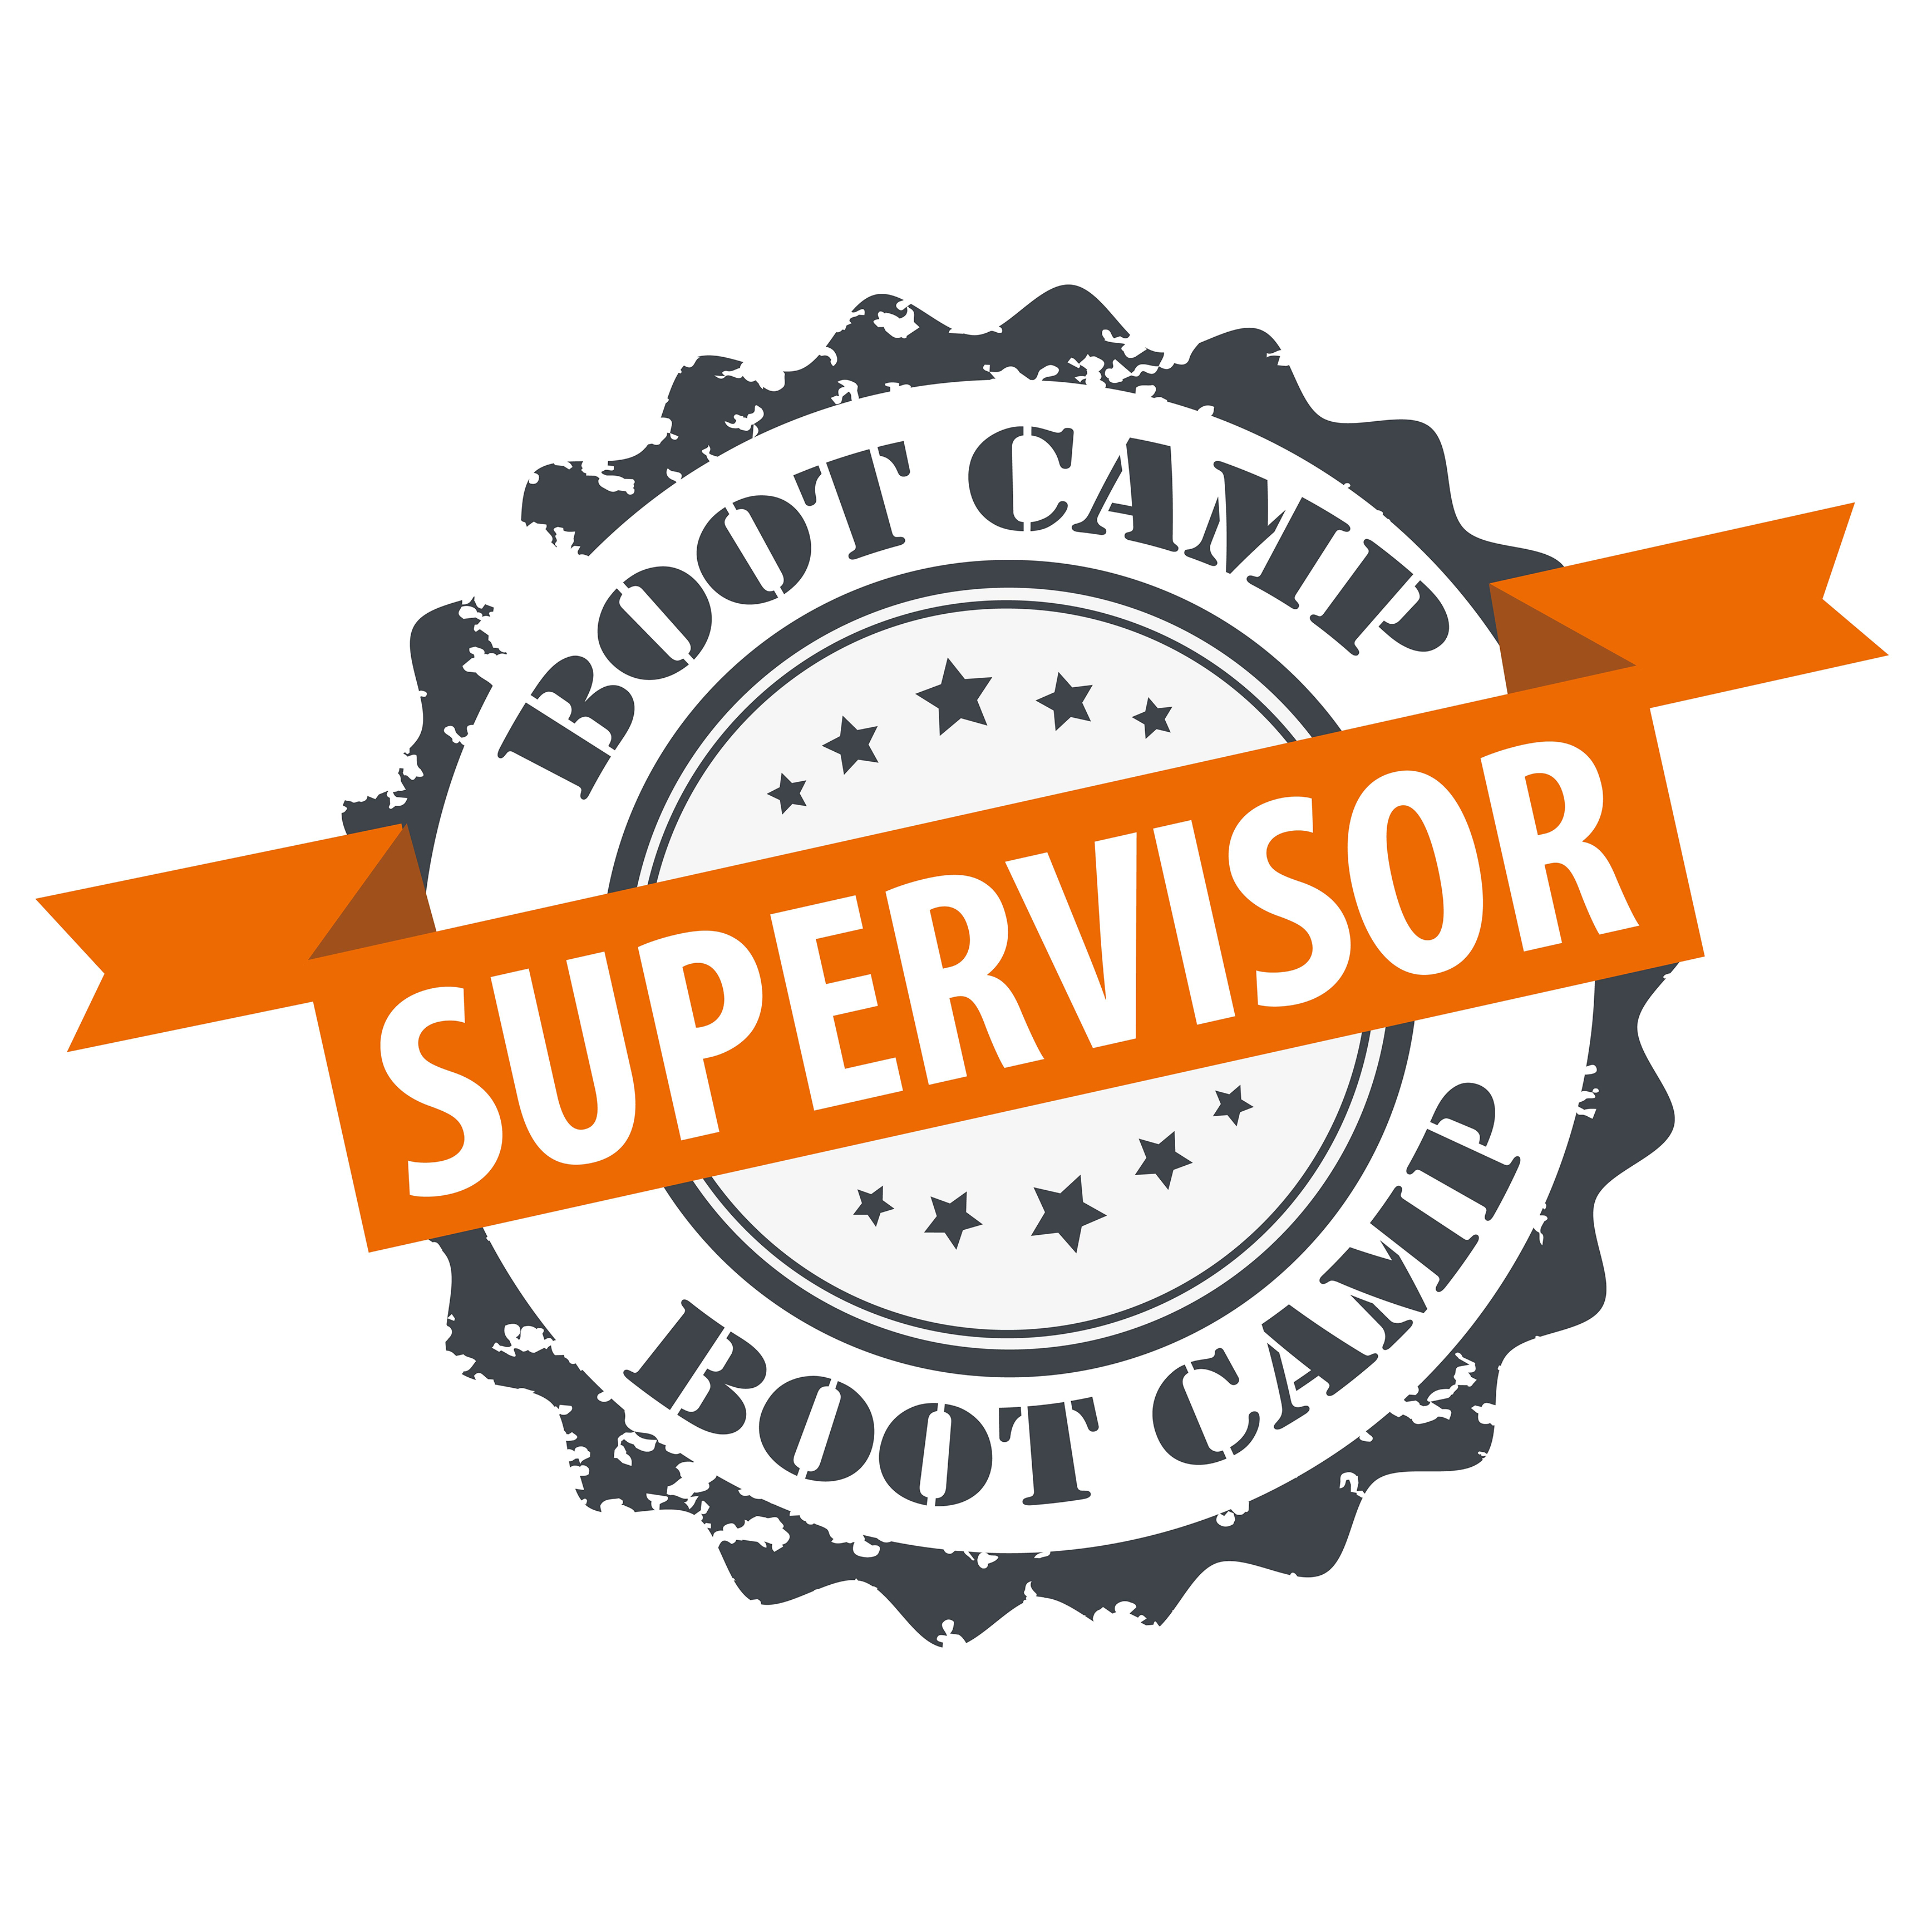 Supervisor Boot Camp